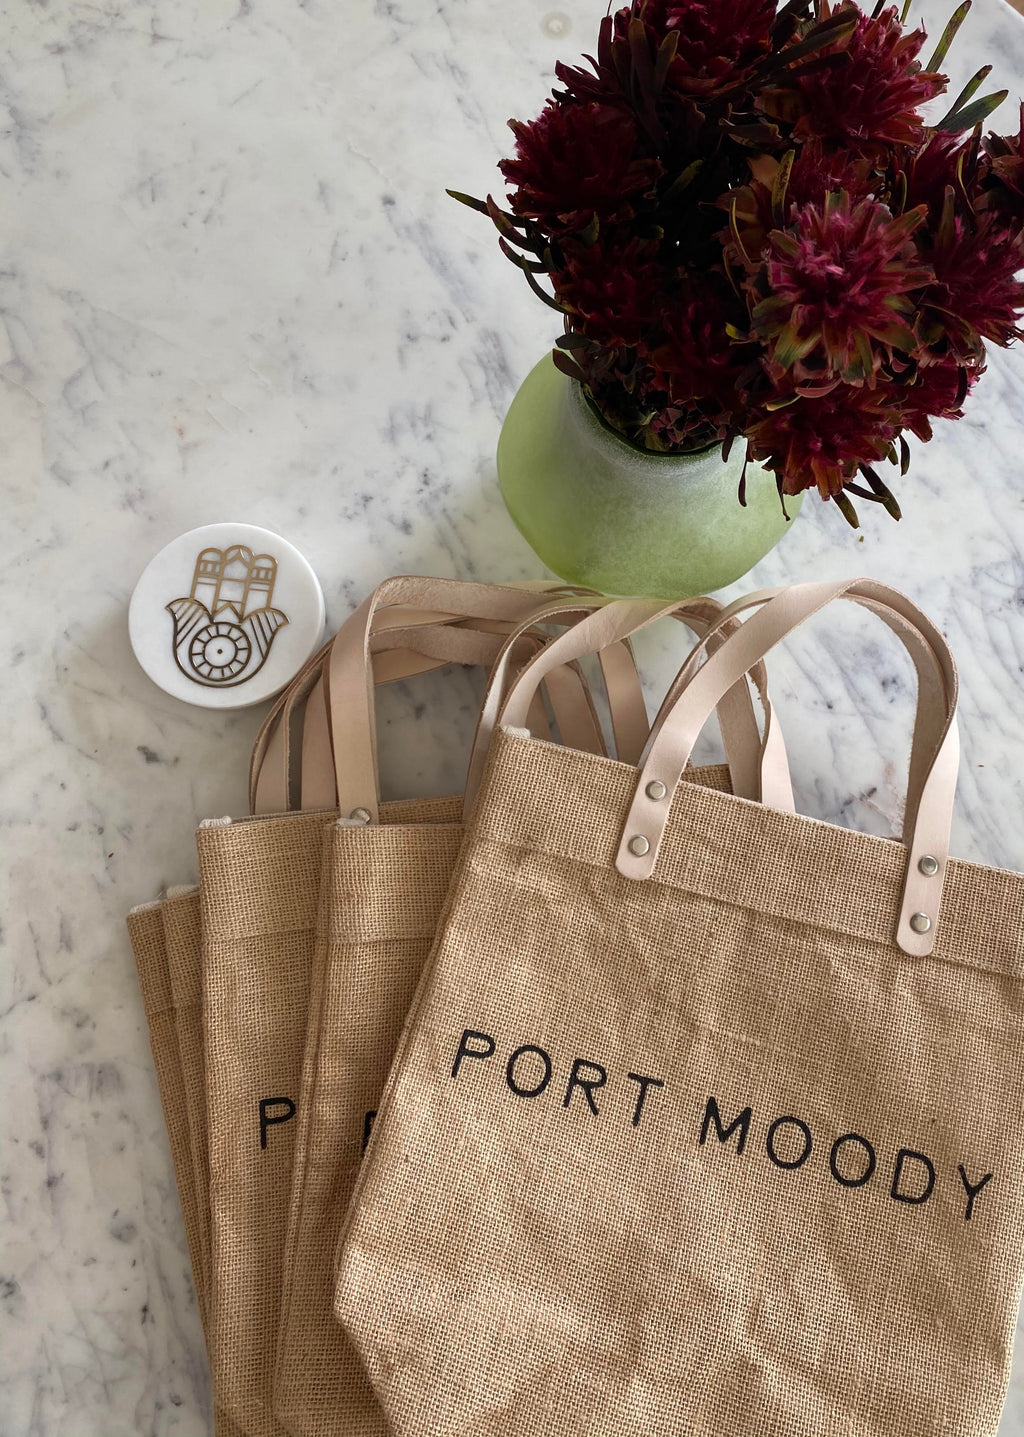 Port Moody Mini Market